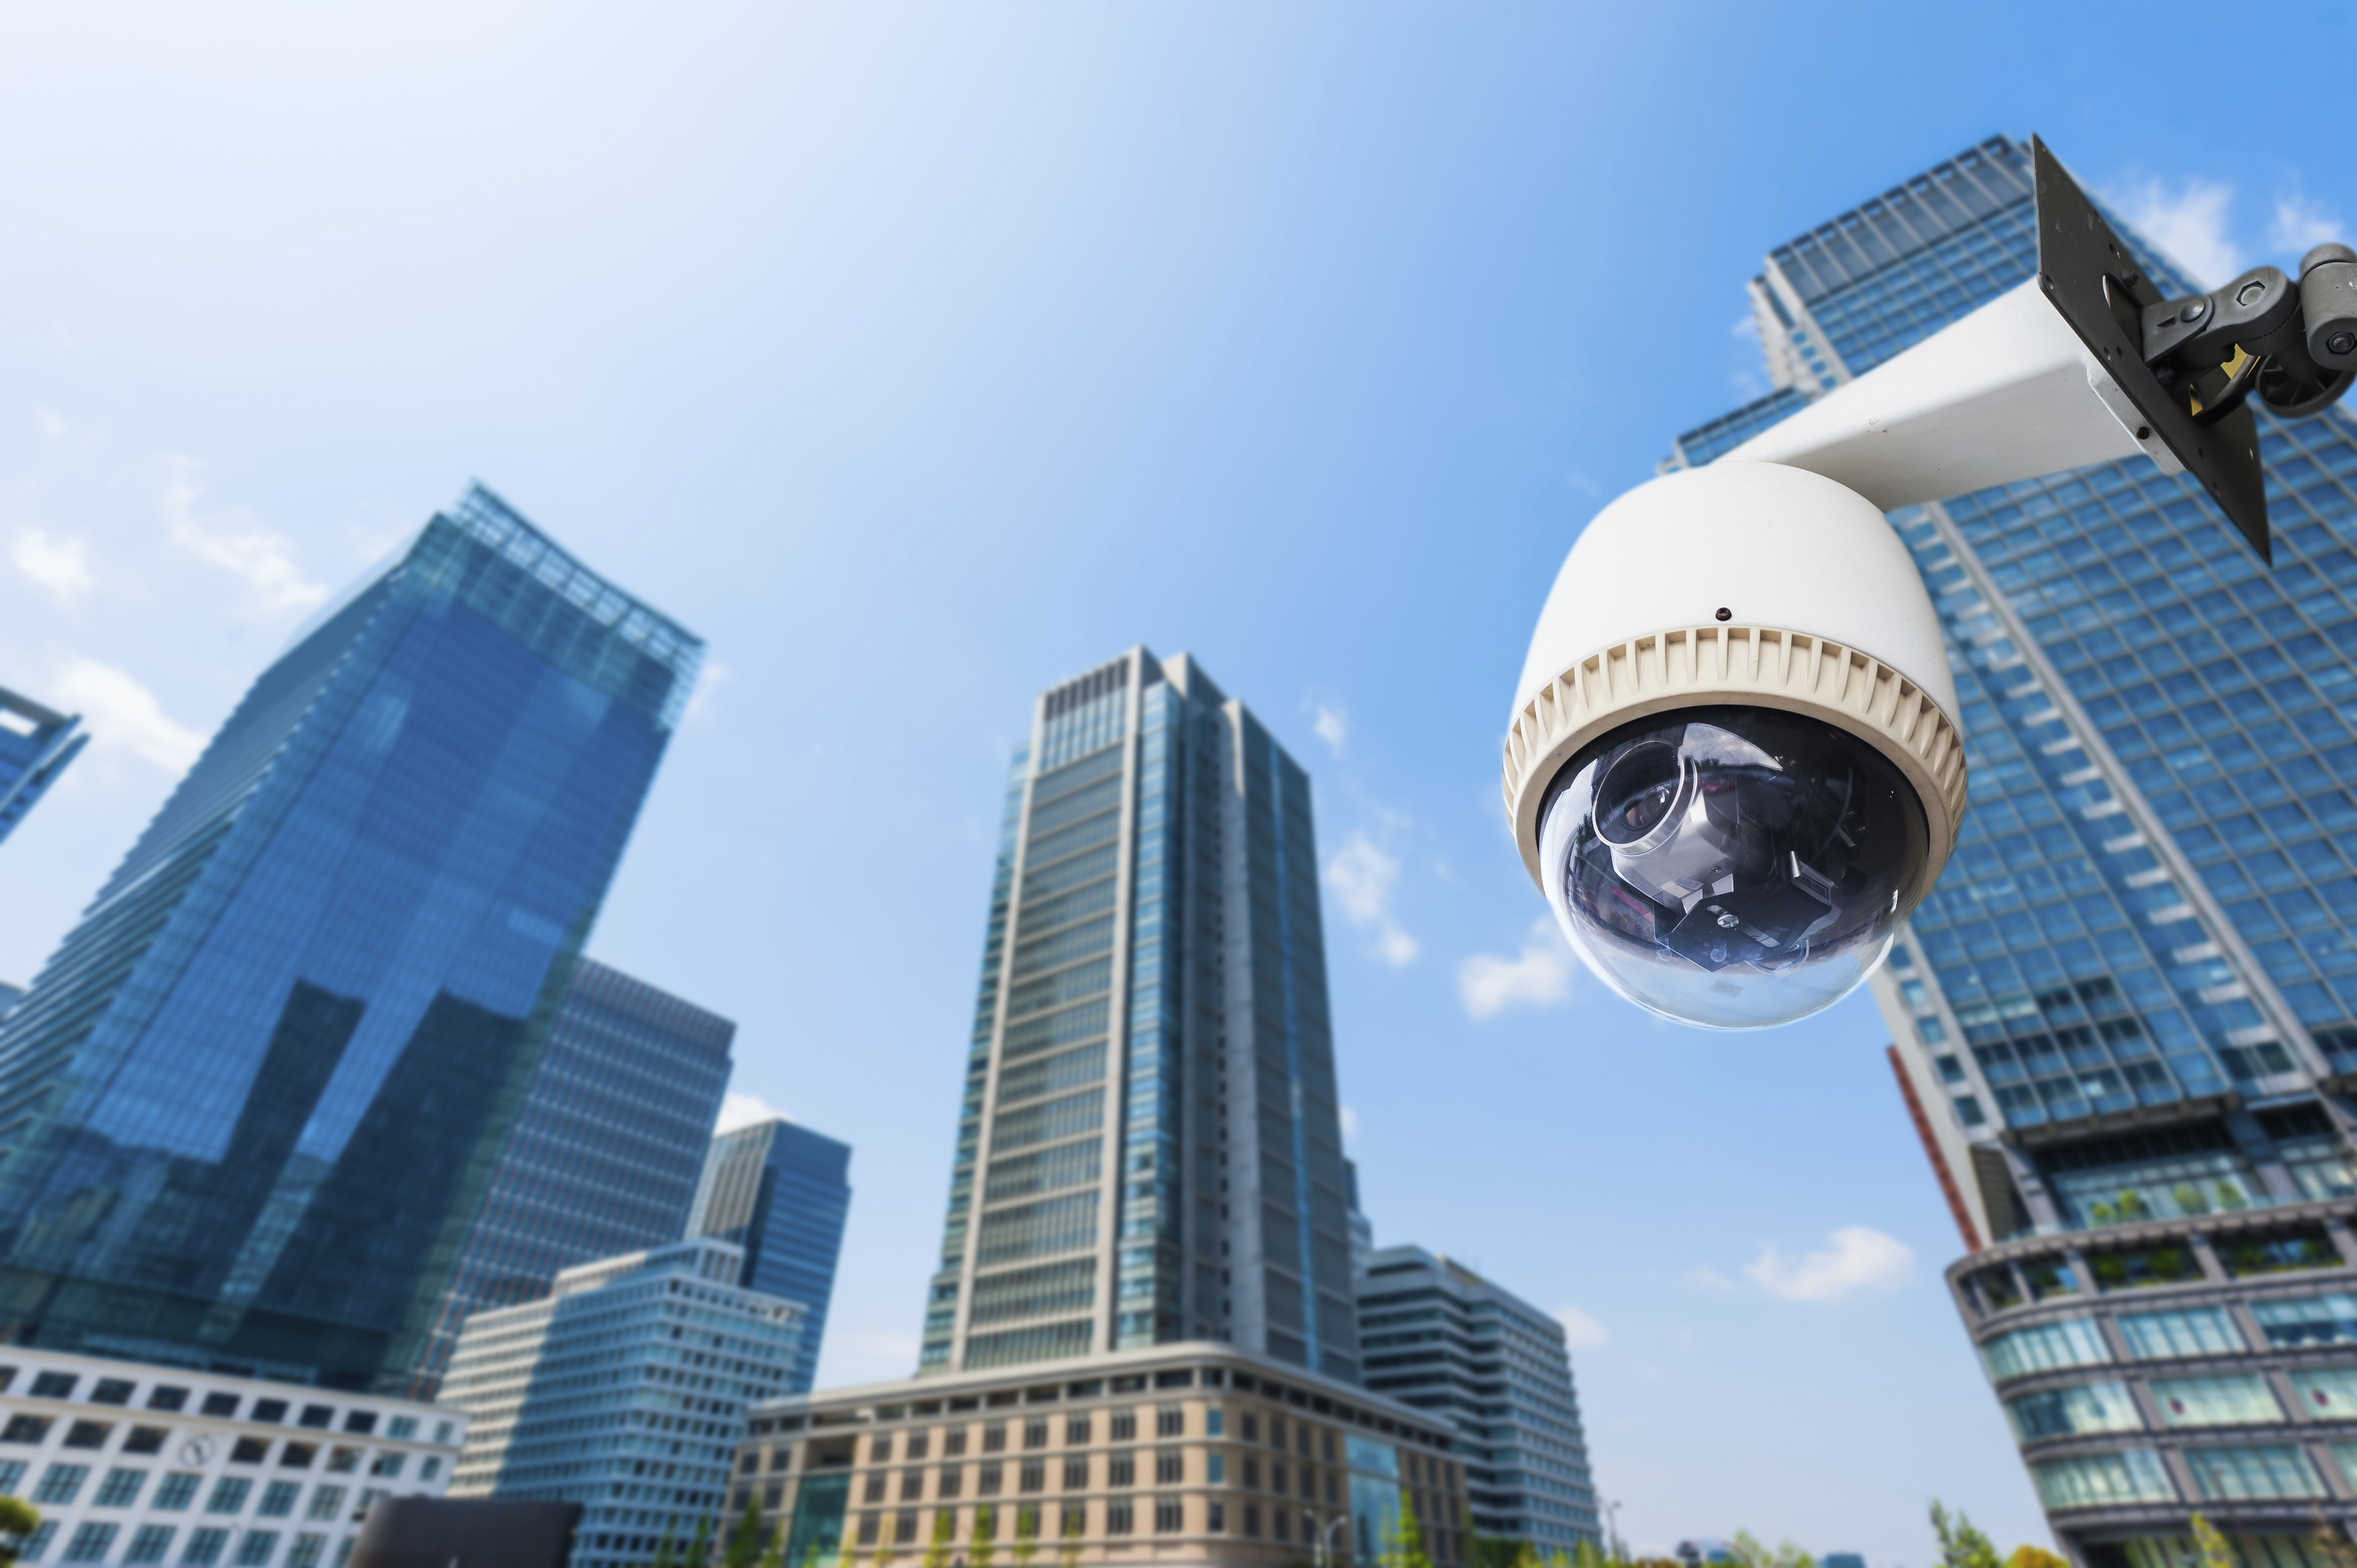 Honeywell Digital Video Manager To Improve Smart Surveillance Ele Times